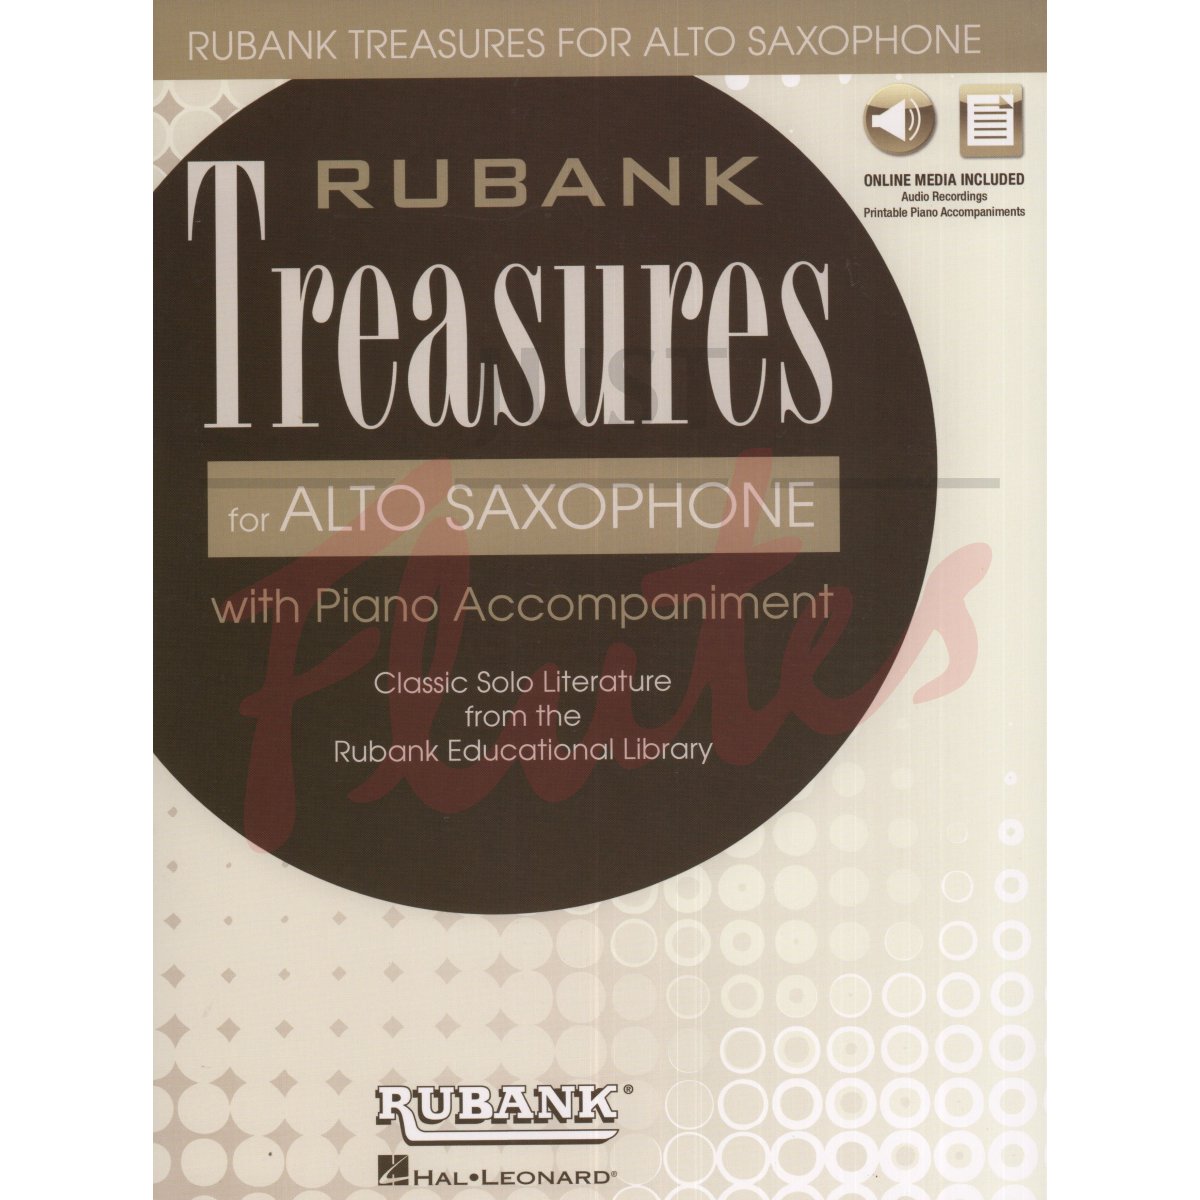 Rubank Treasures for Alto Saxophone with Piano Accompaniment (Download)